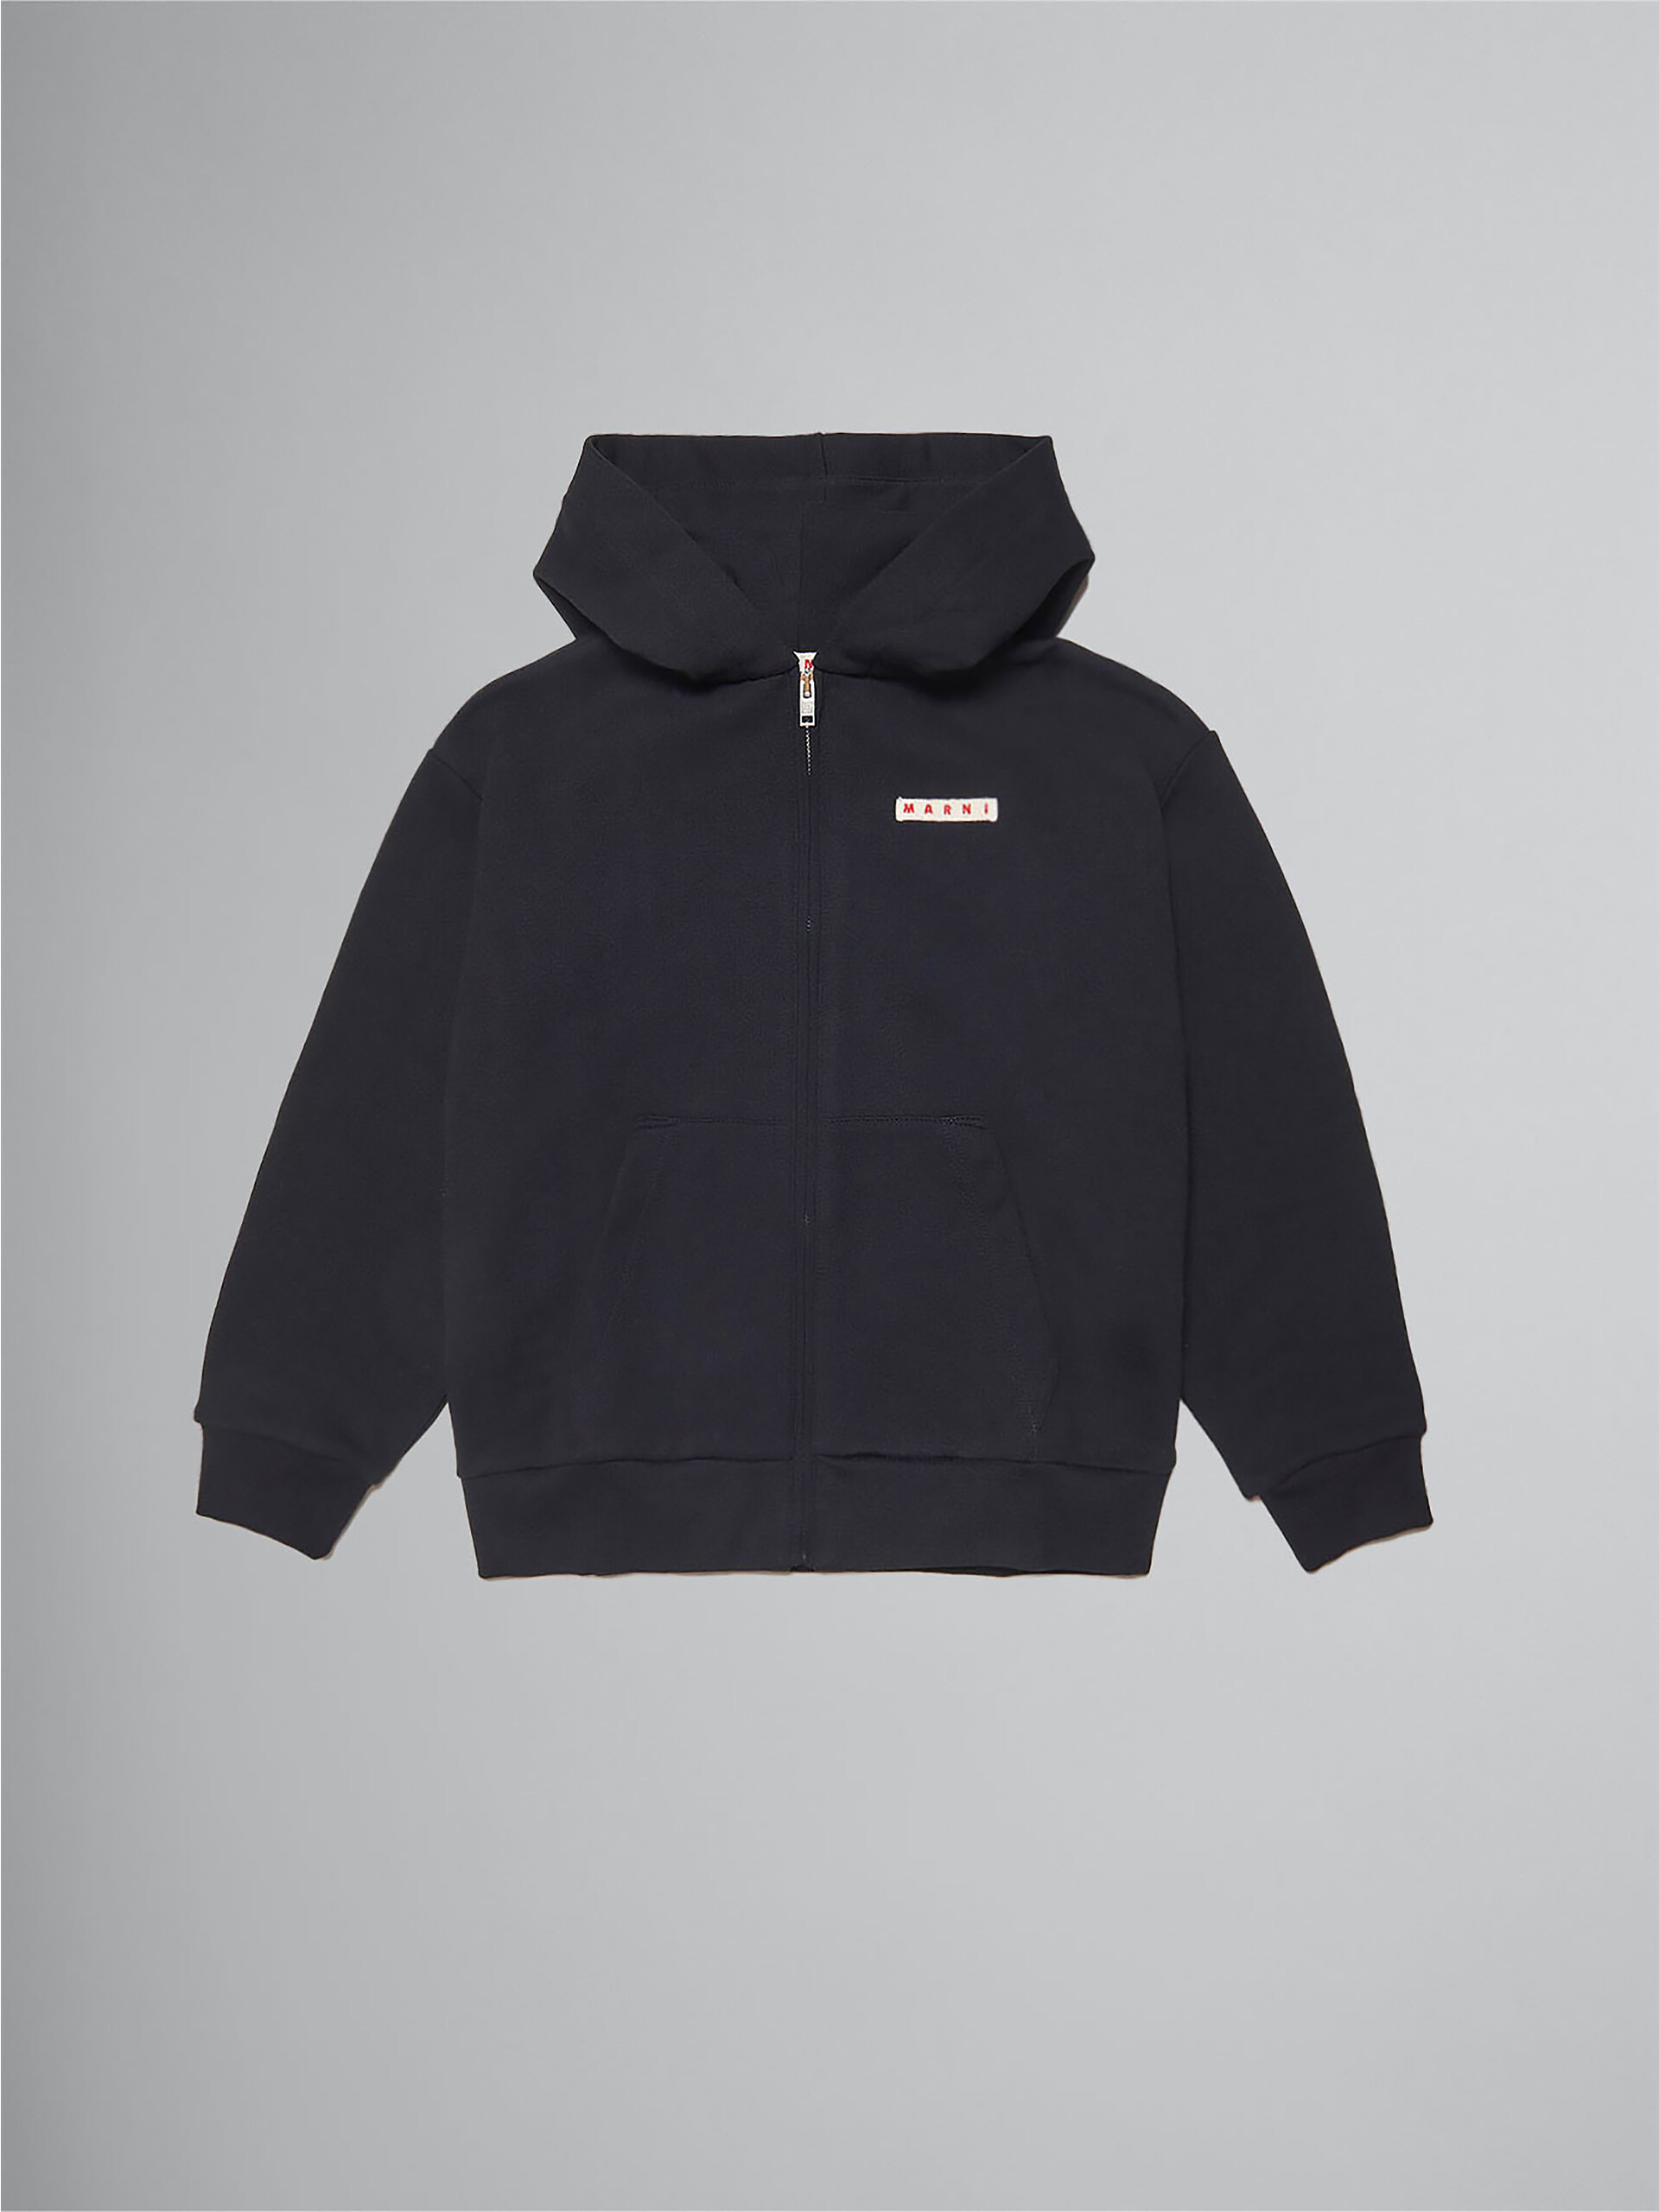 Black cotton hoodie - Sweaters - Image 1